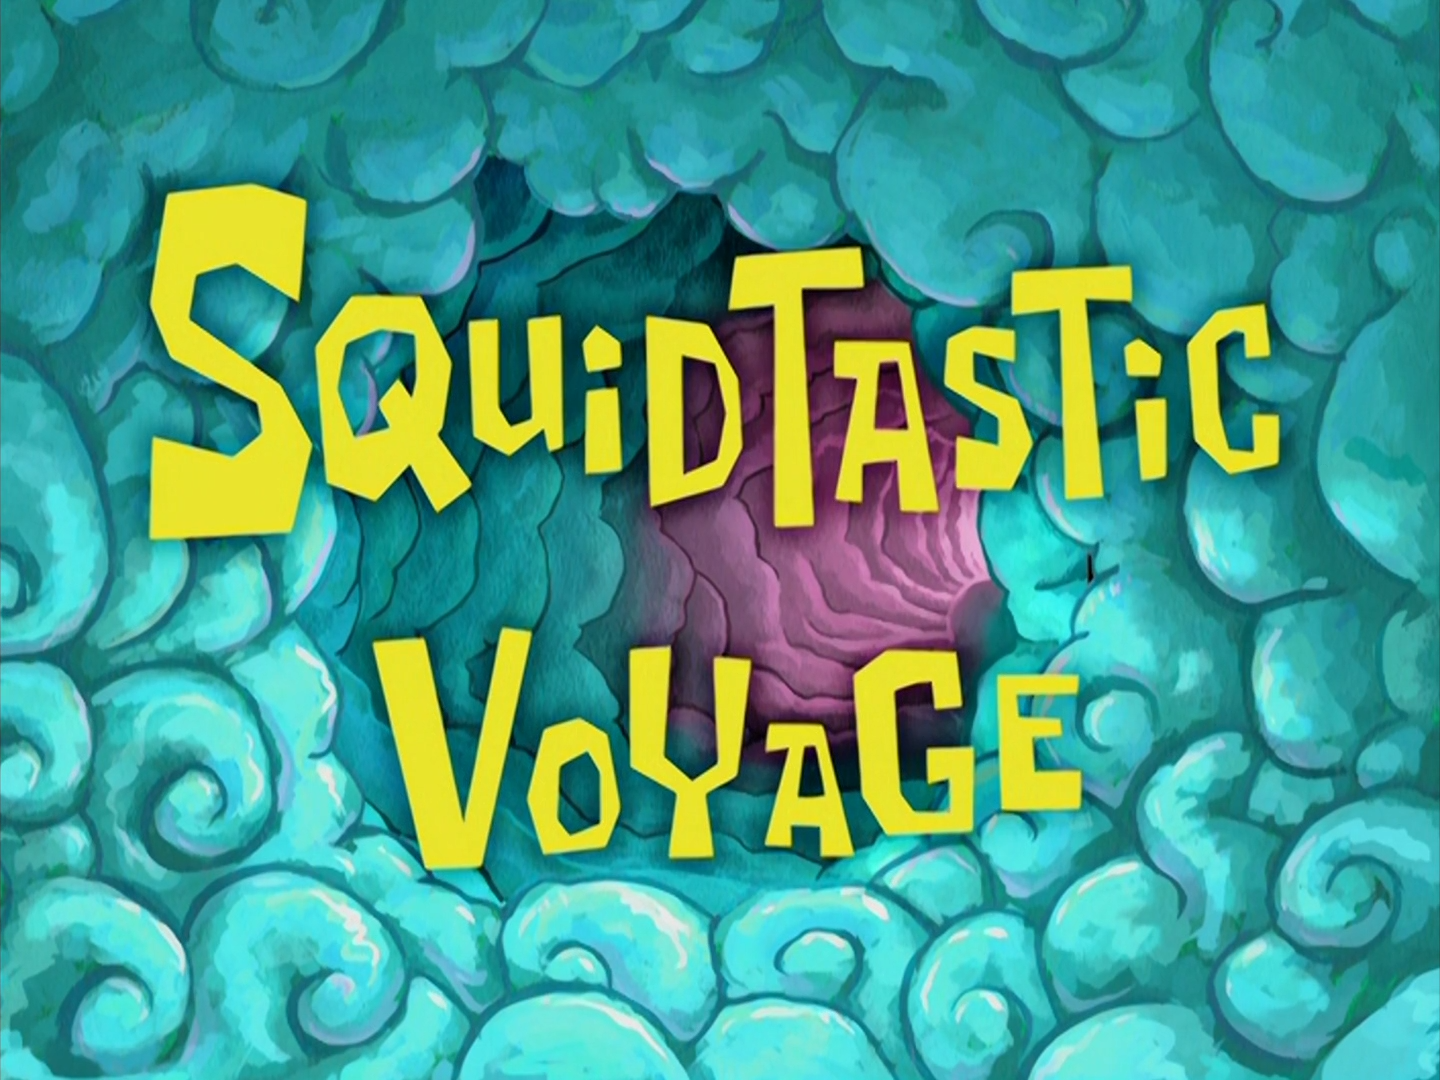 spongebob squidward voyage